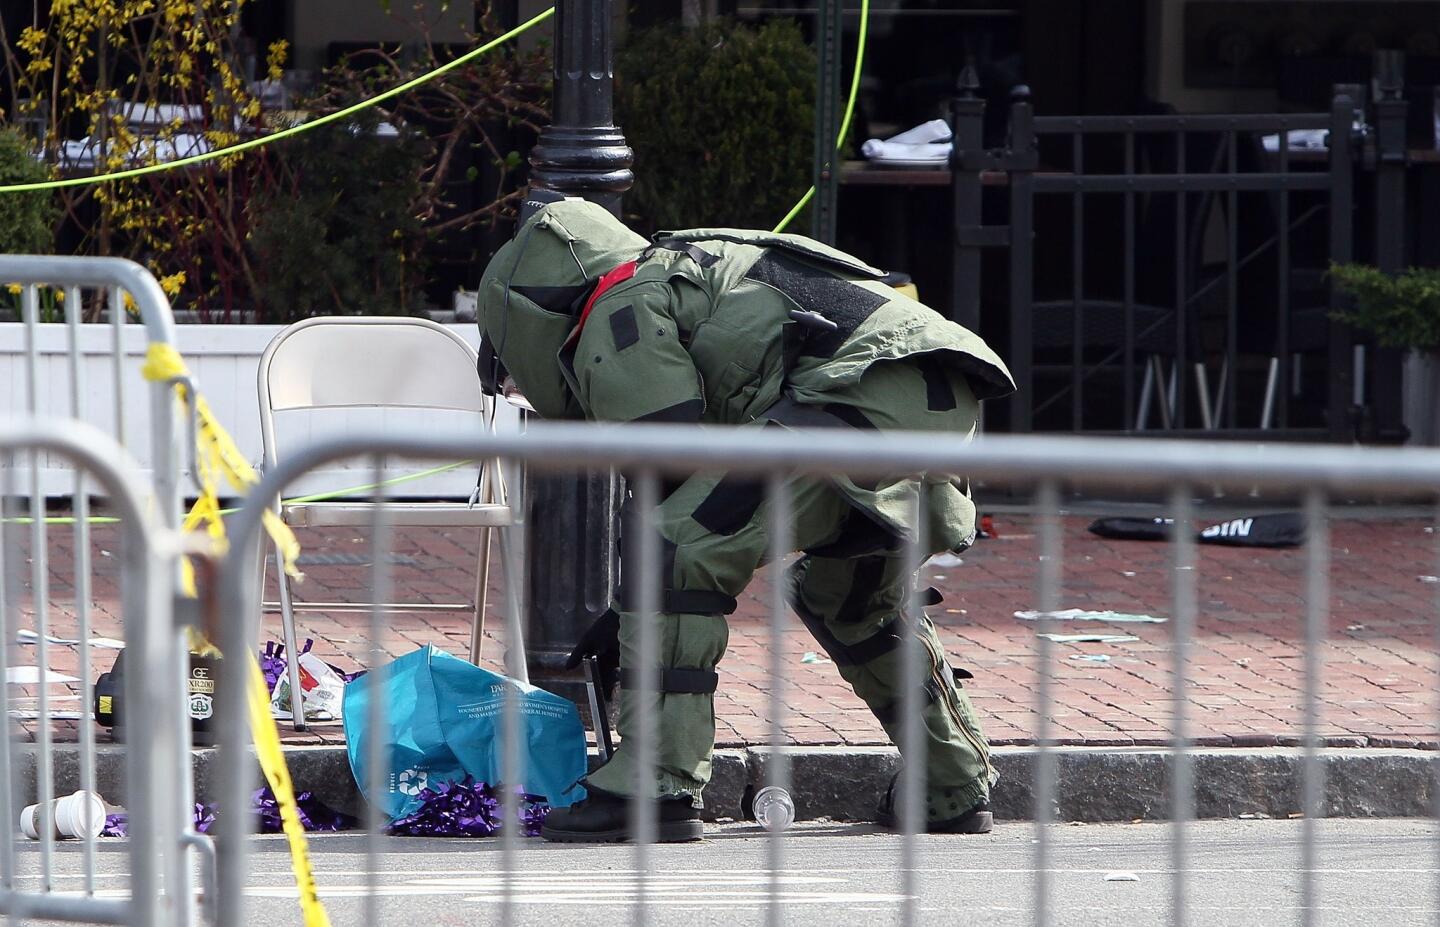 Boston bombing